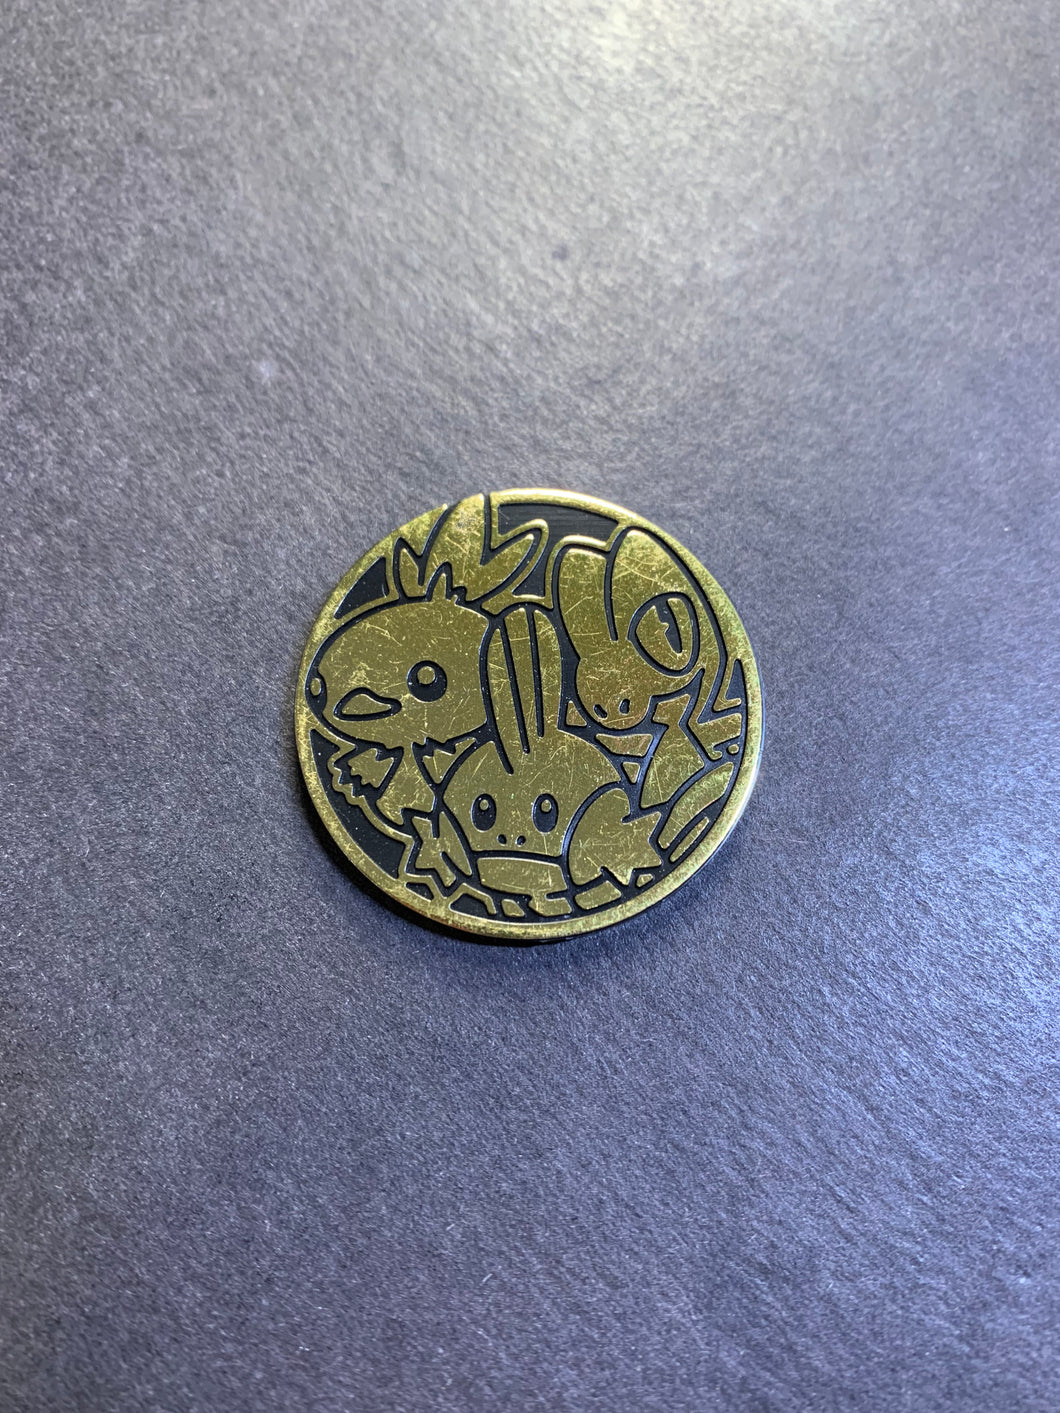 Official Mudkip, Treecko, Torchic Pokemon Coin